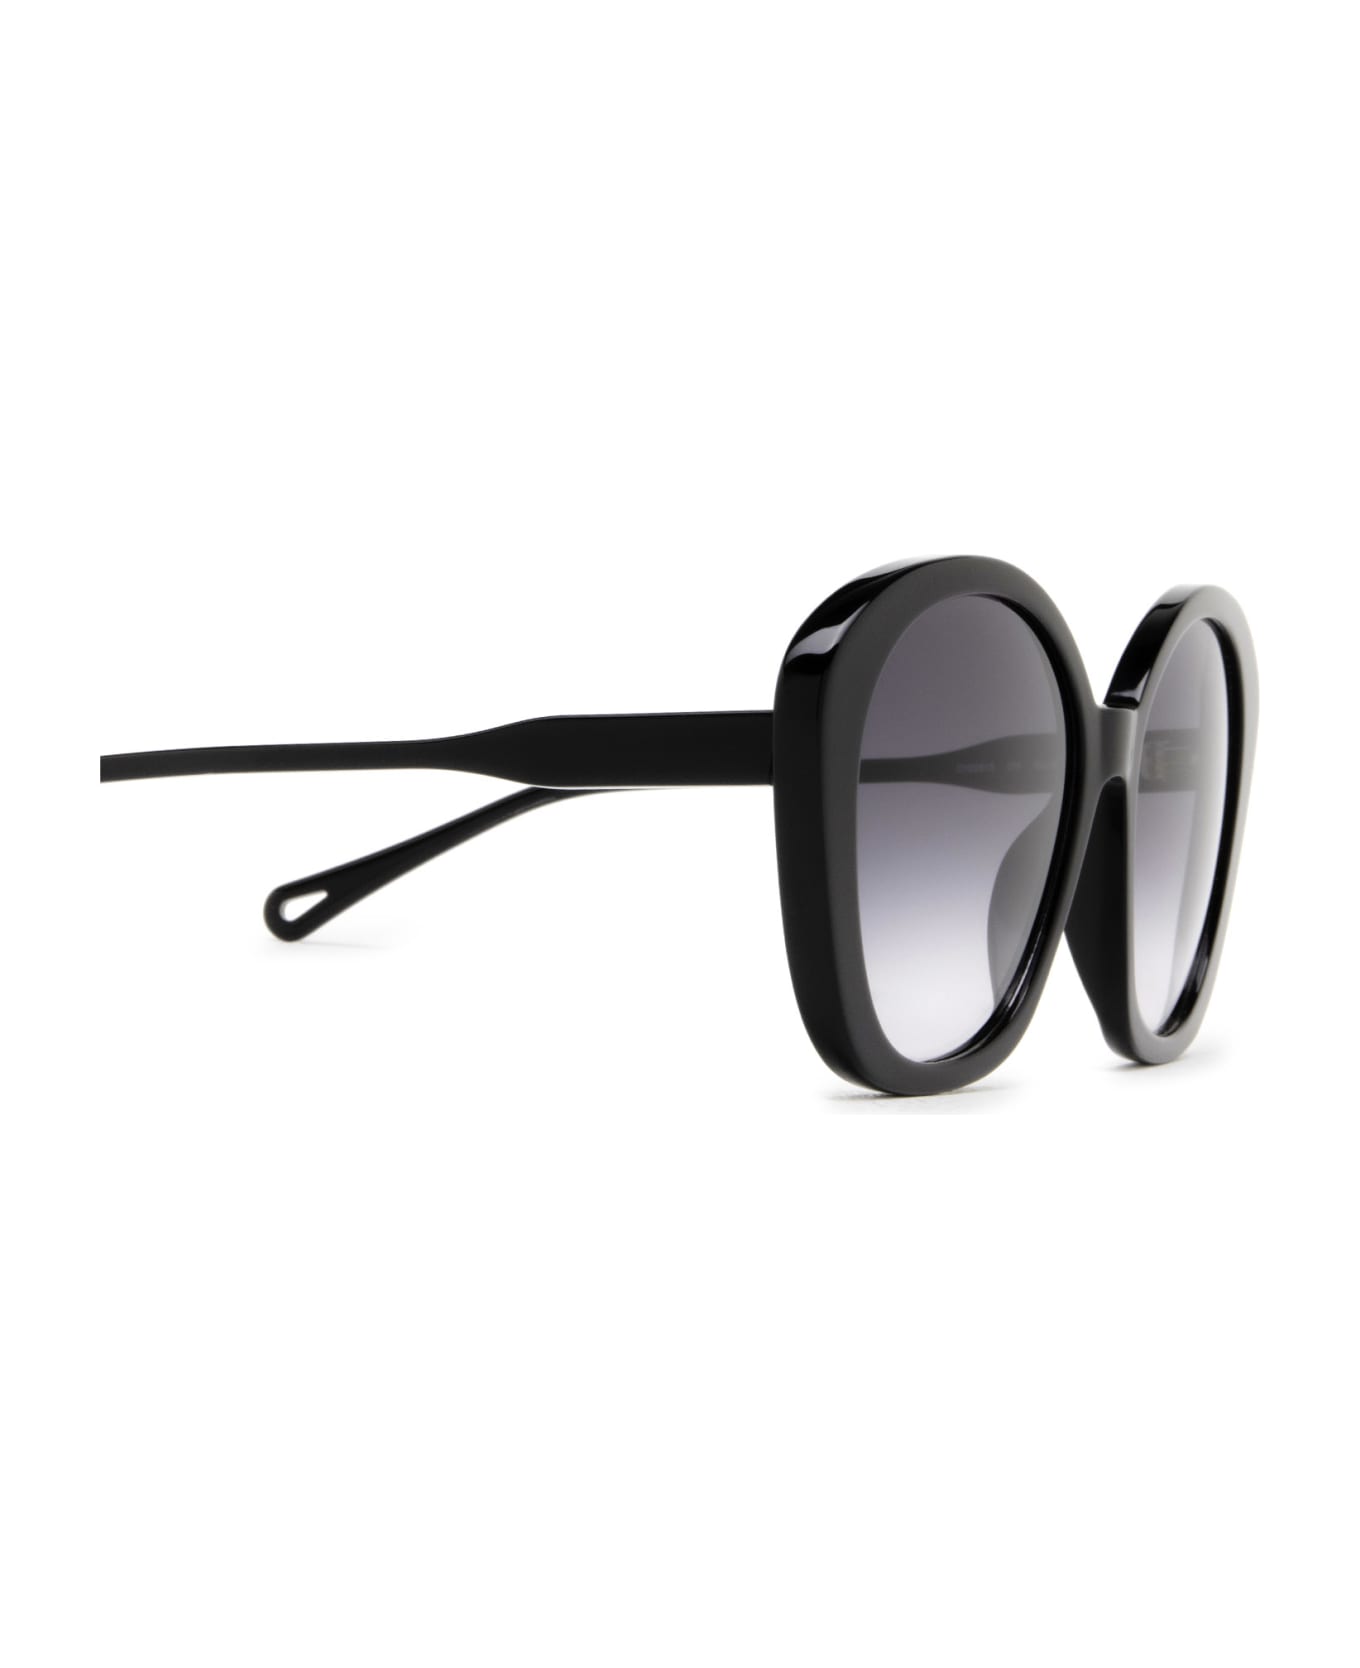 Chloé Eyewear Ch0081s Black Sunglasses - Black